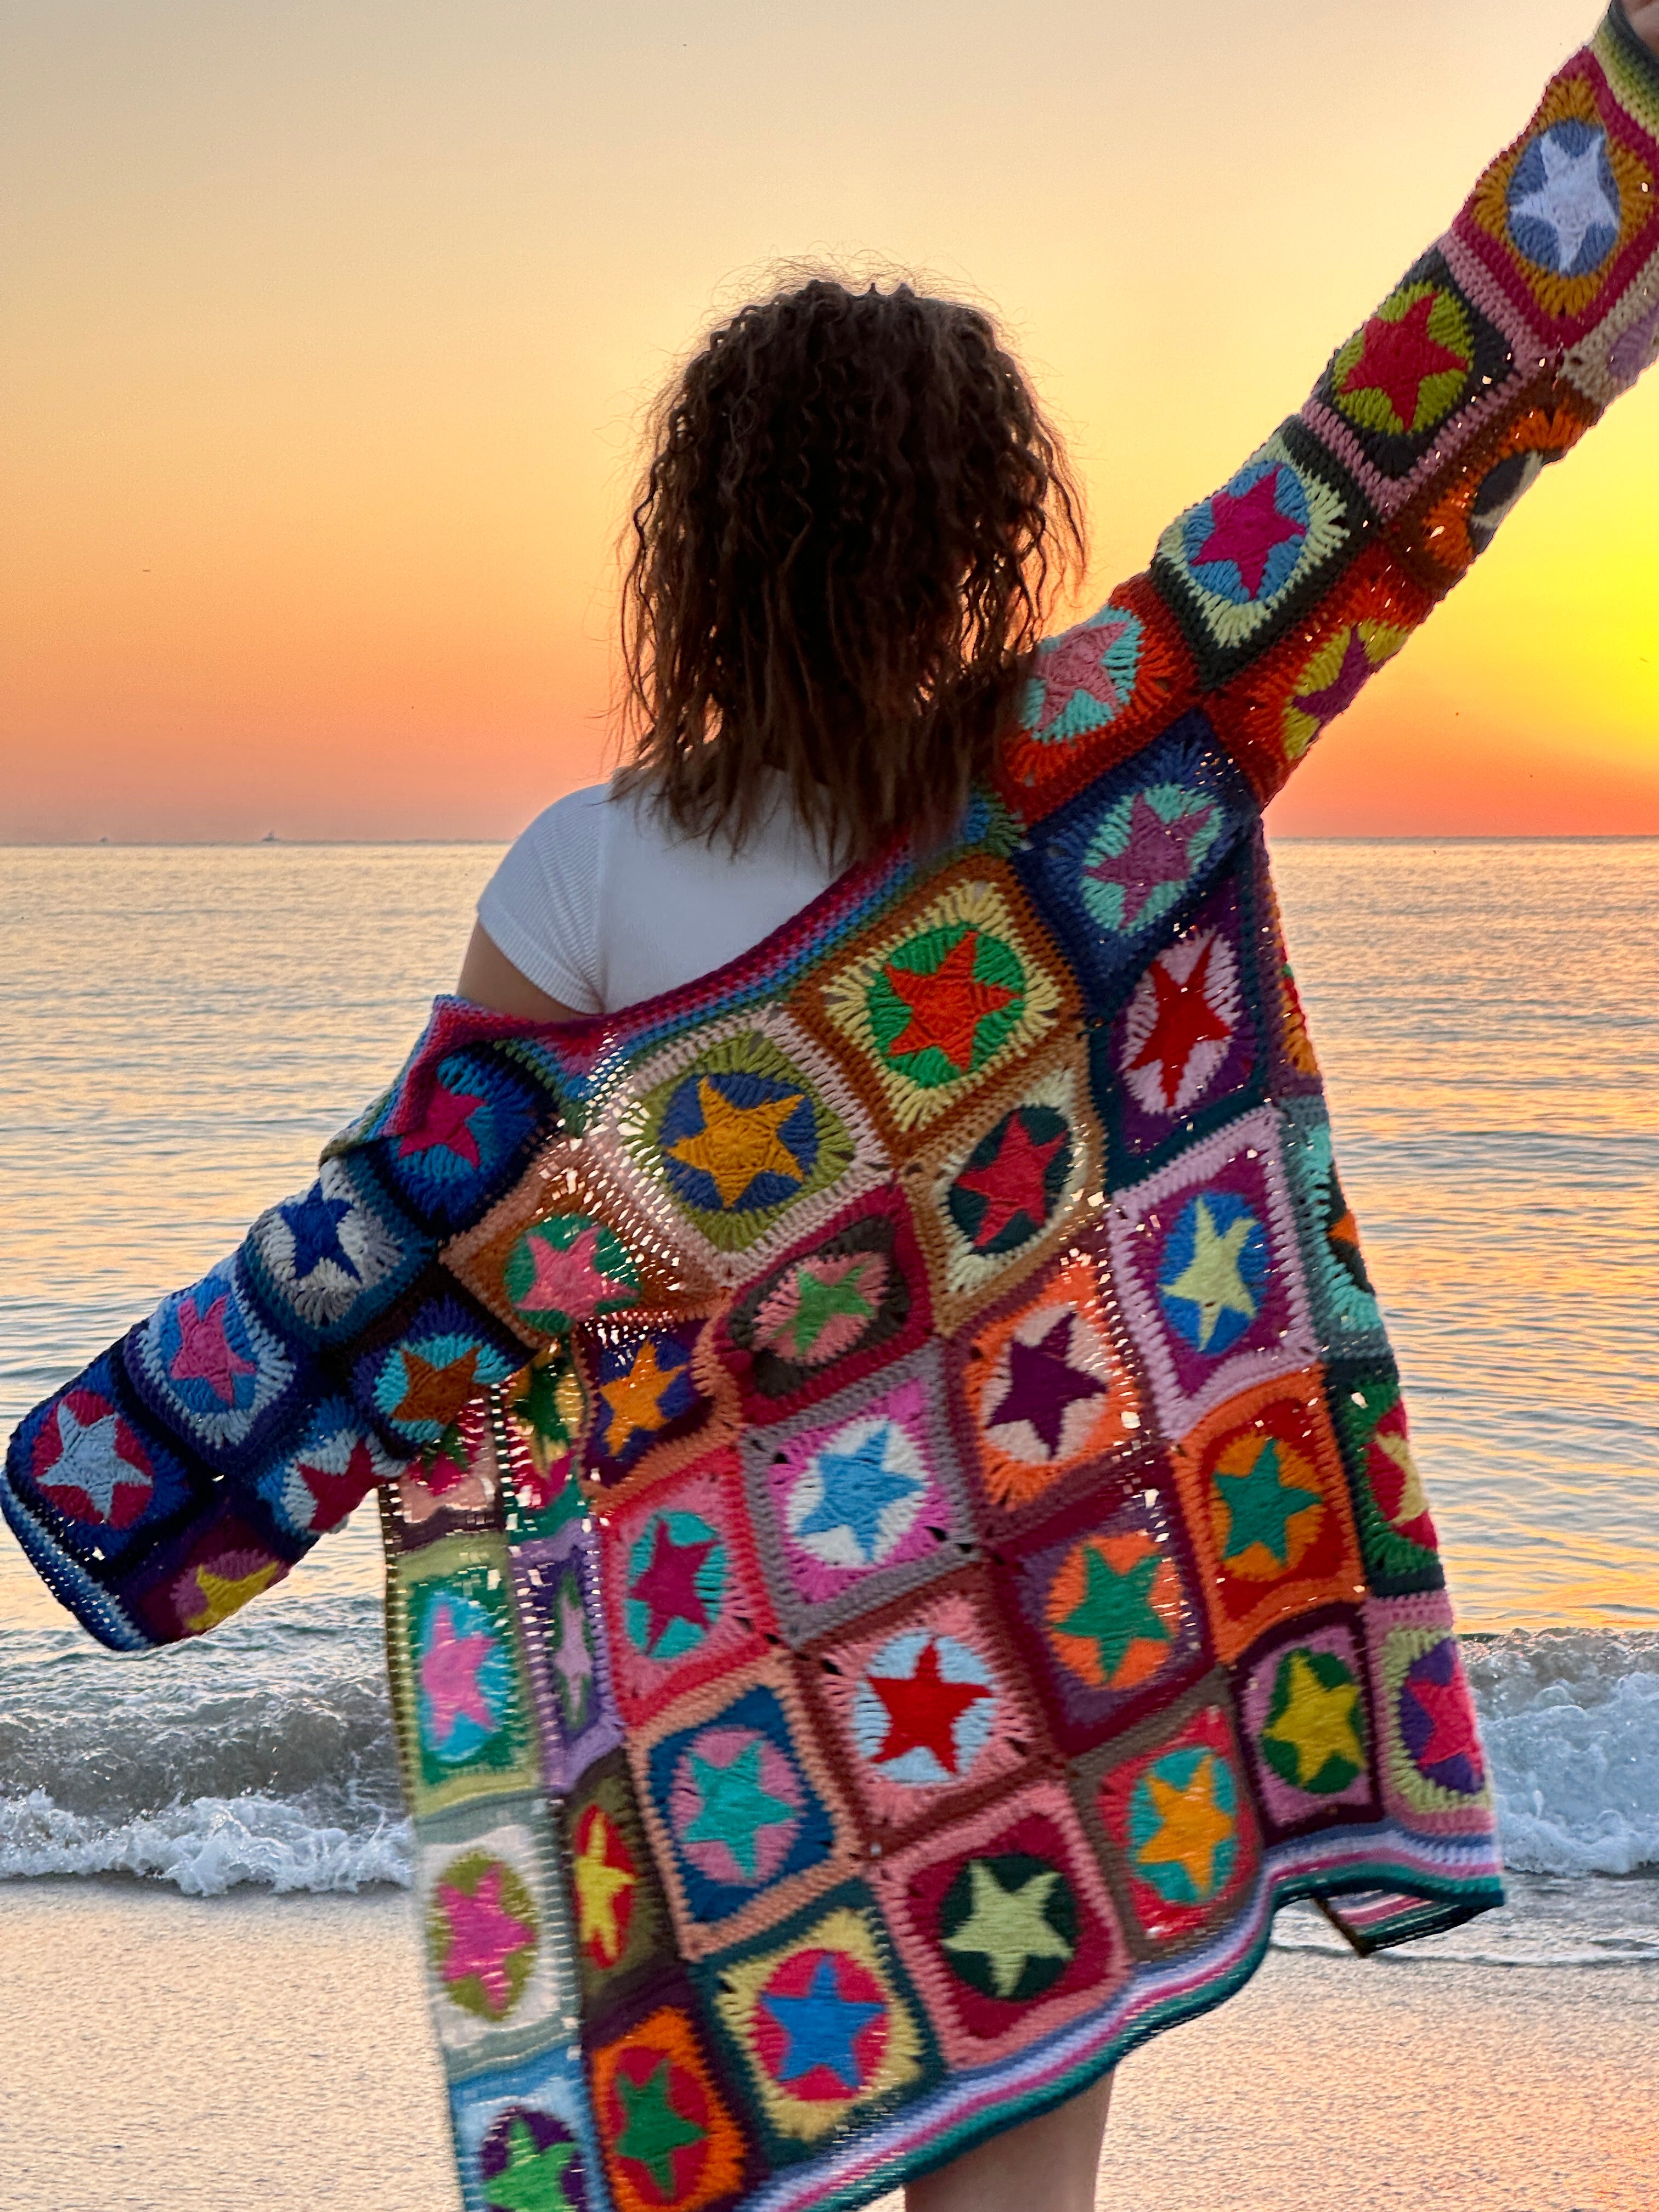 Crochet Star Cardigan Pattern (instant download)